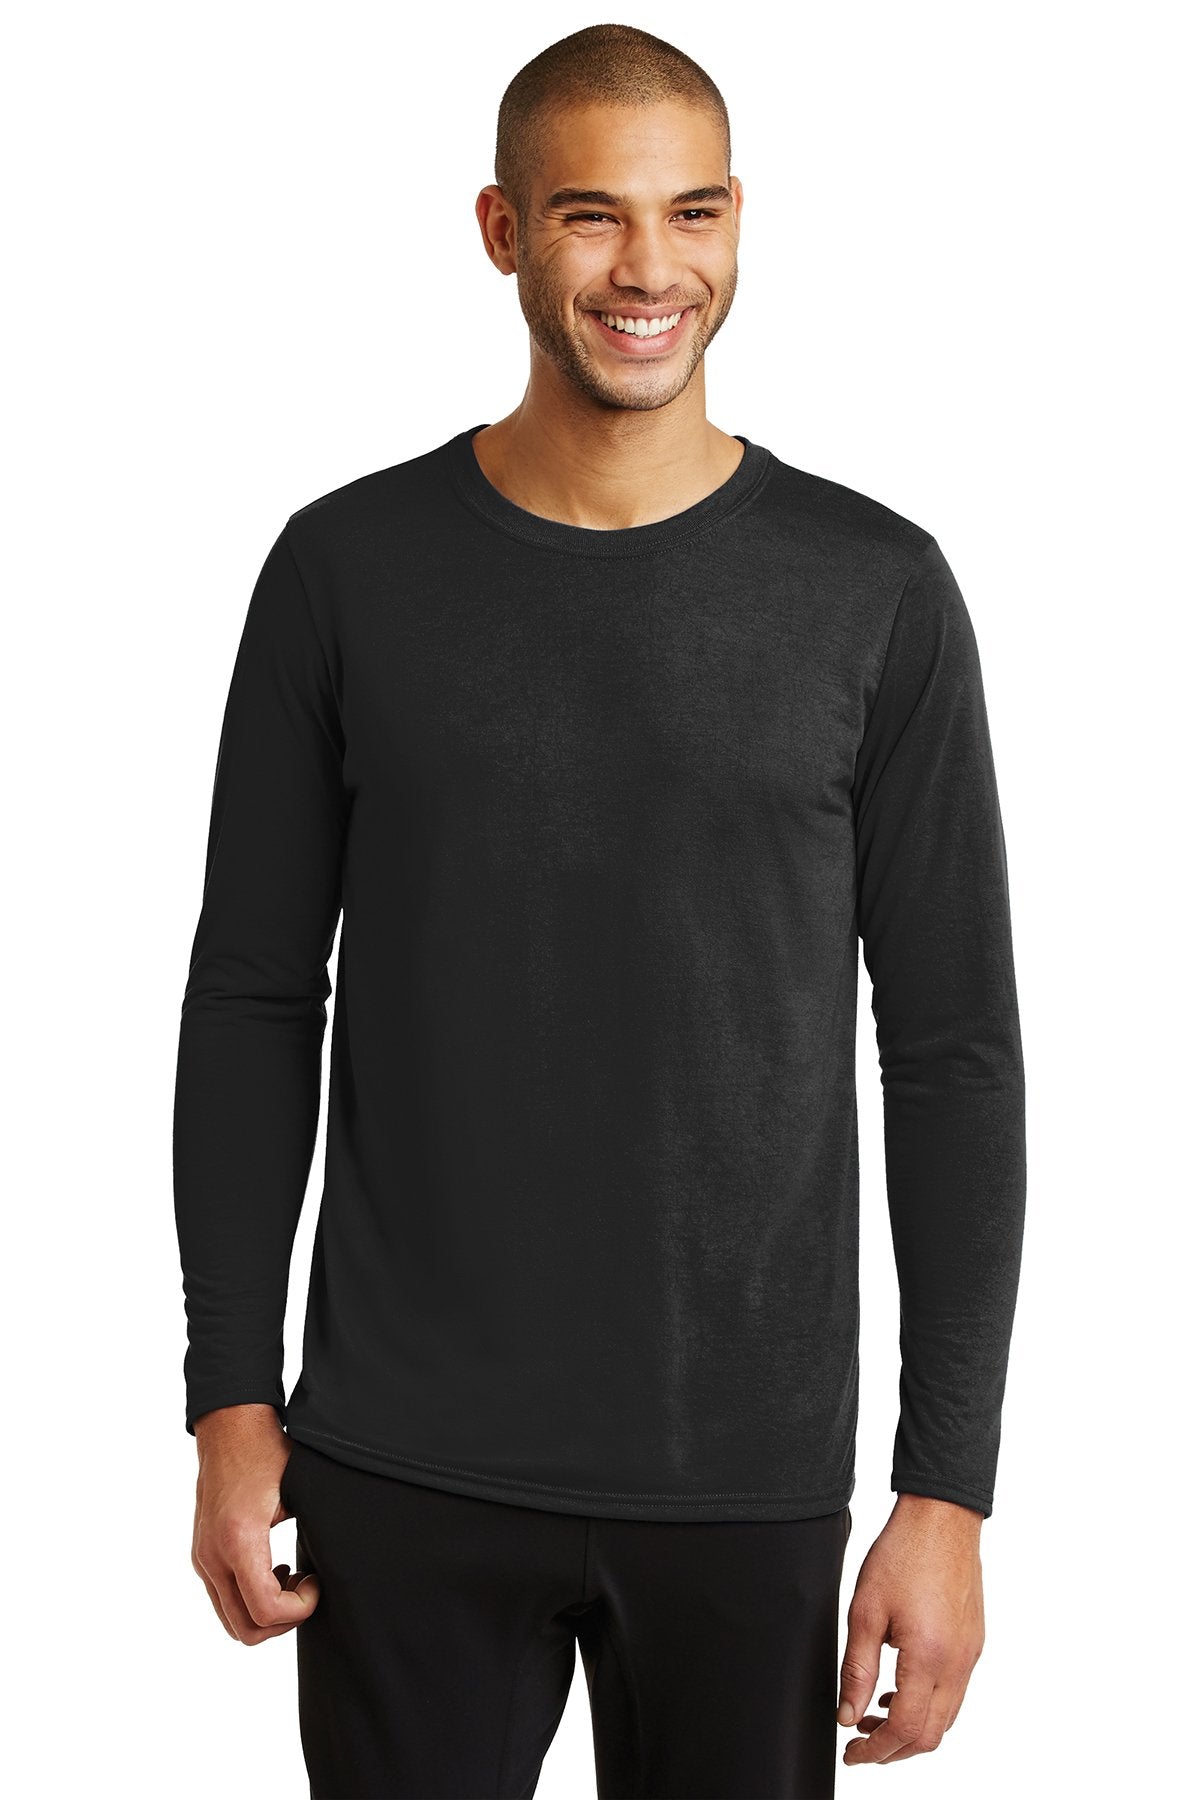 Gildan Performance Long Sleeve T Shirt in Black, add a custom design